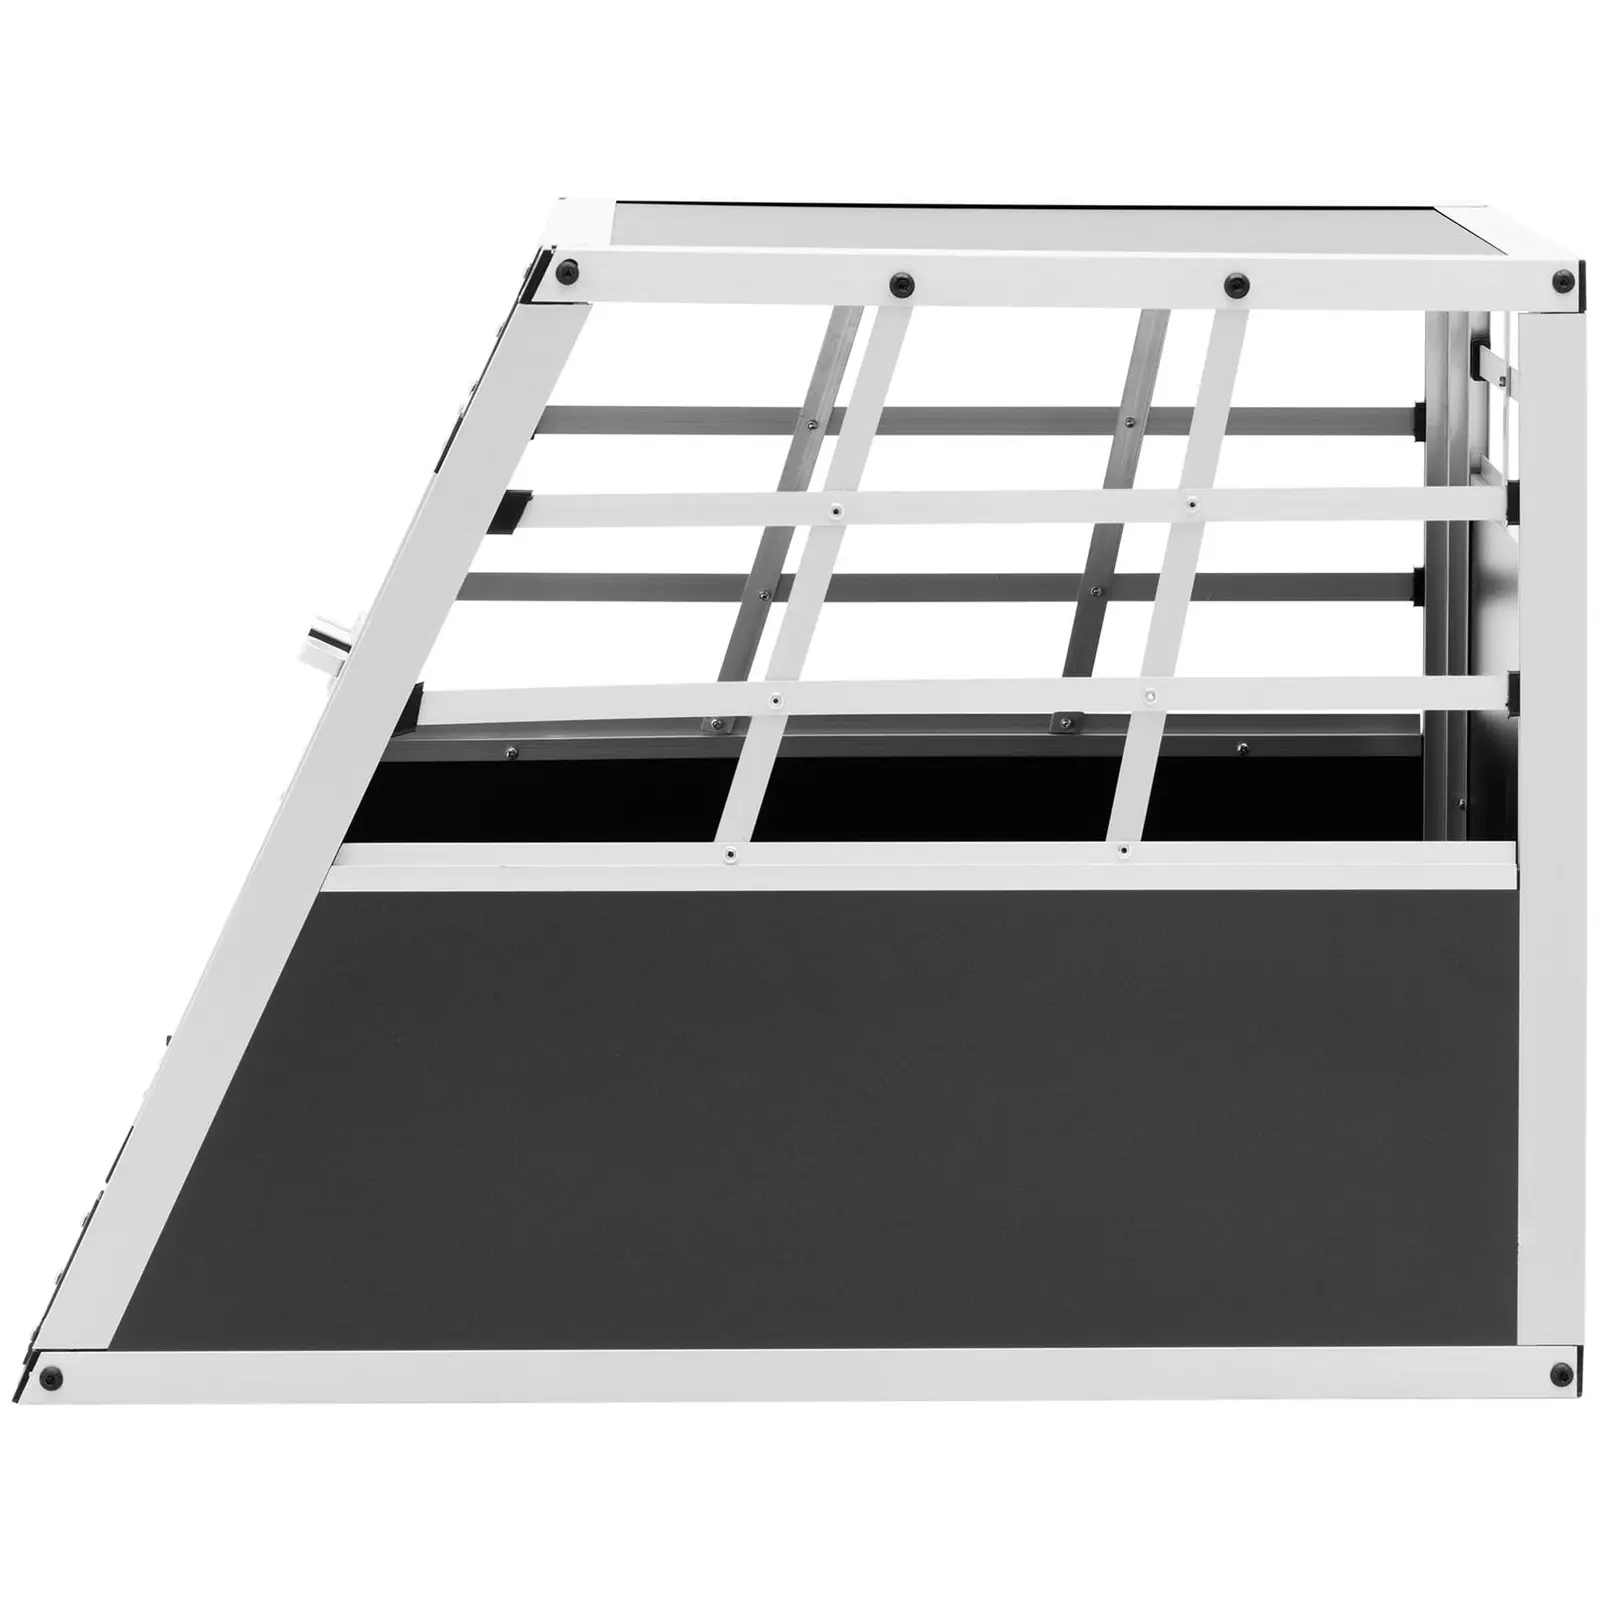 Dog Crate - Aluminium - Trapezoid shape - 55 x 70 x 50 cm